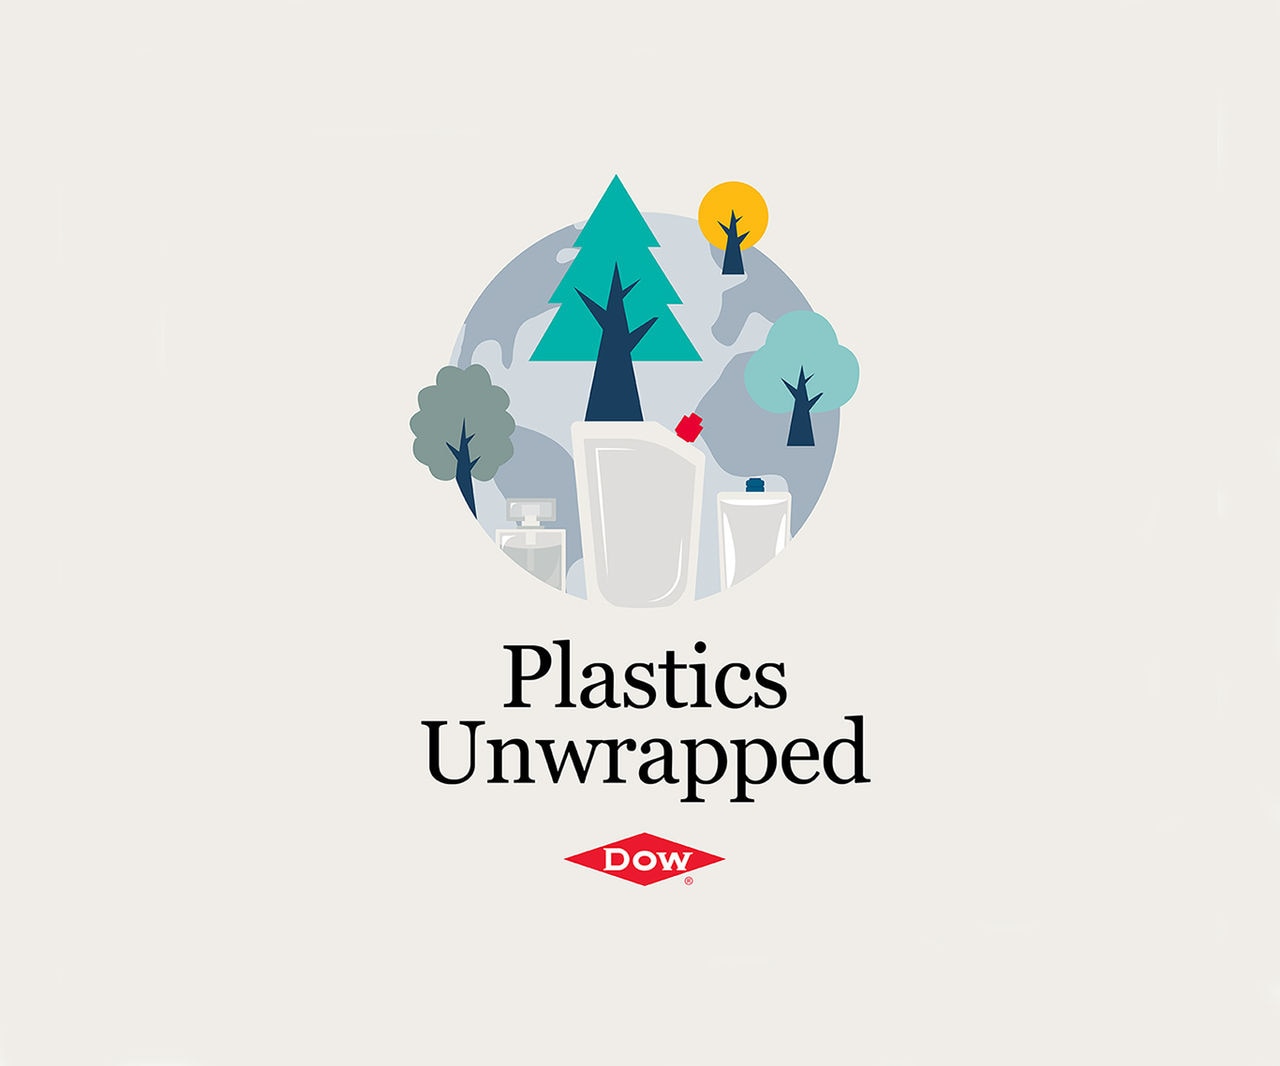 Plastics unwrapped podcast logo